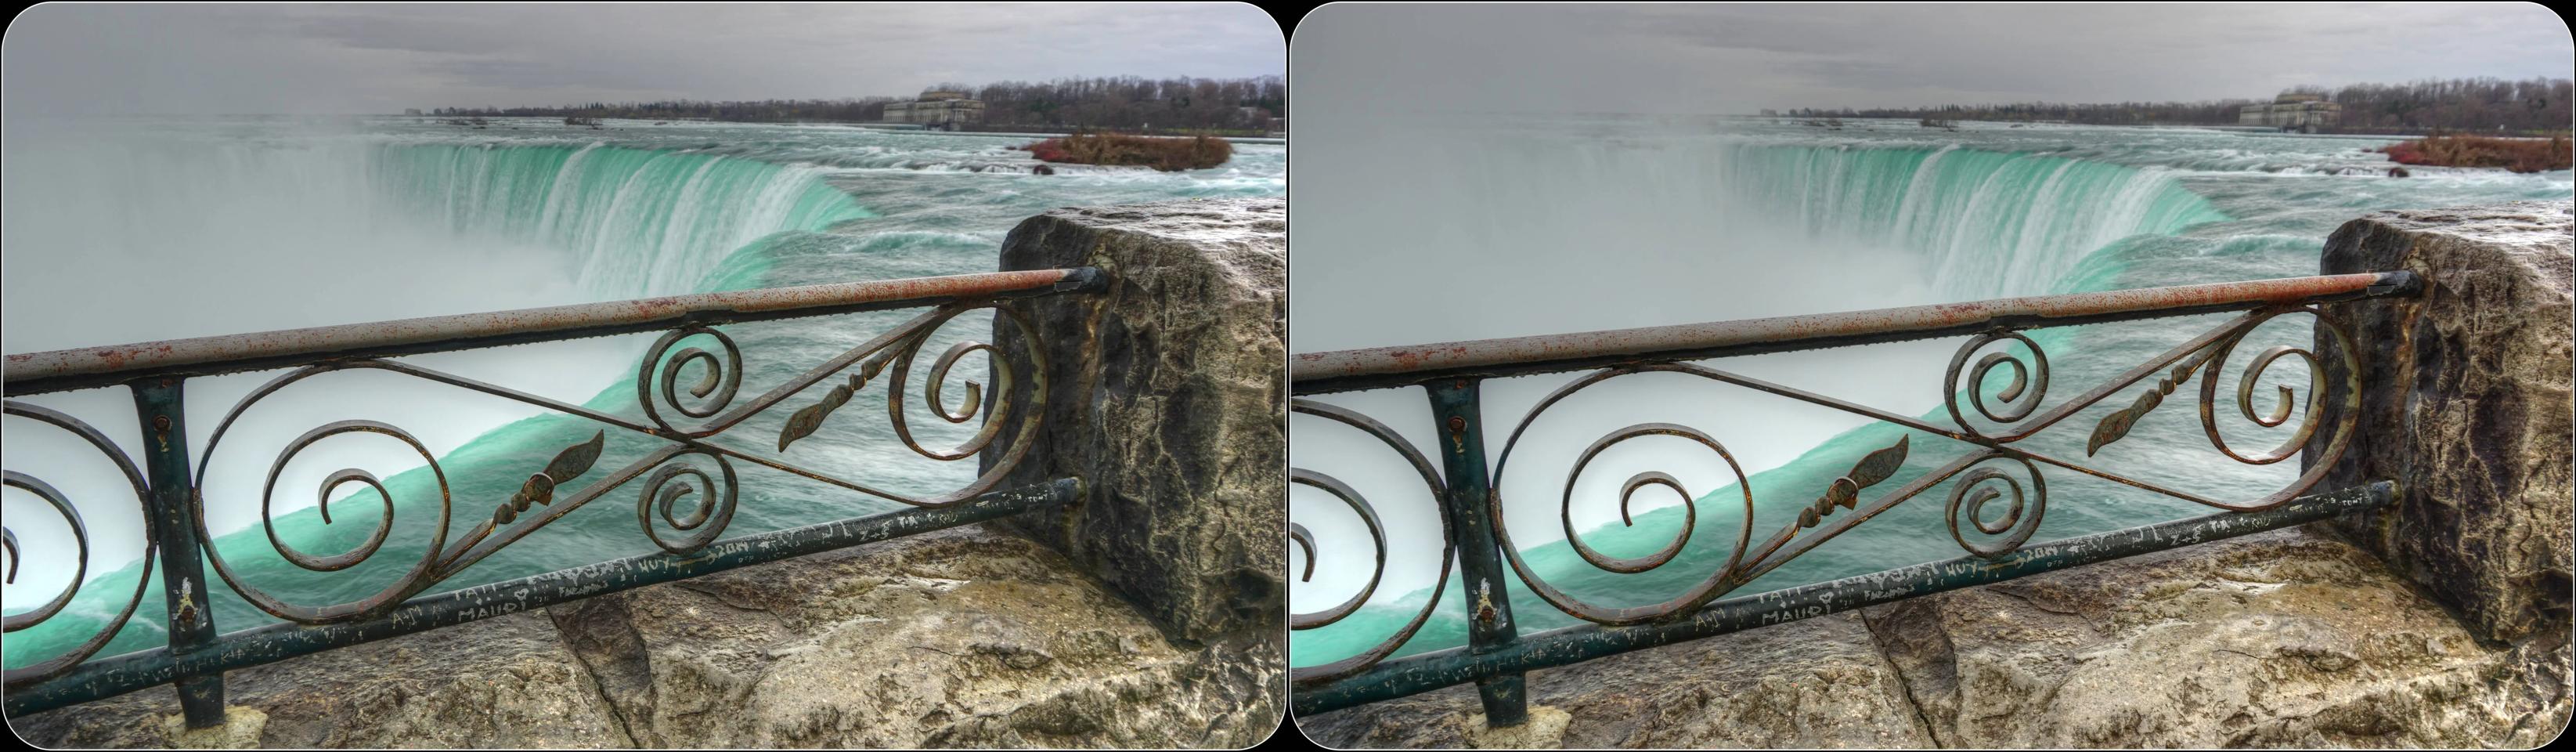 Niagara Wrought Iron detail